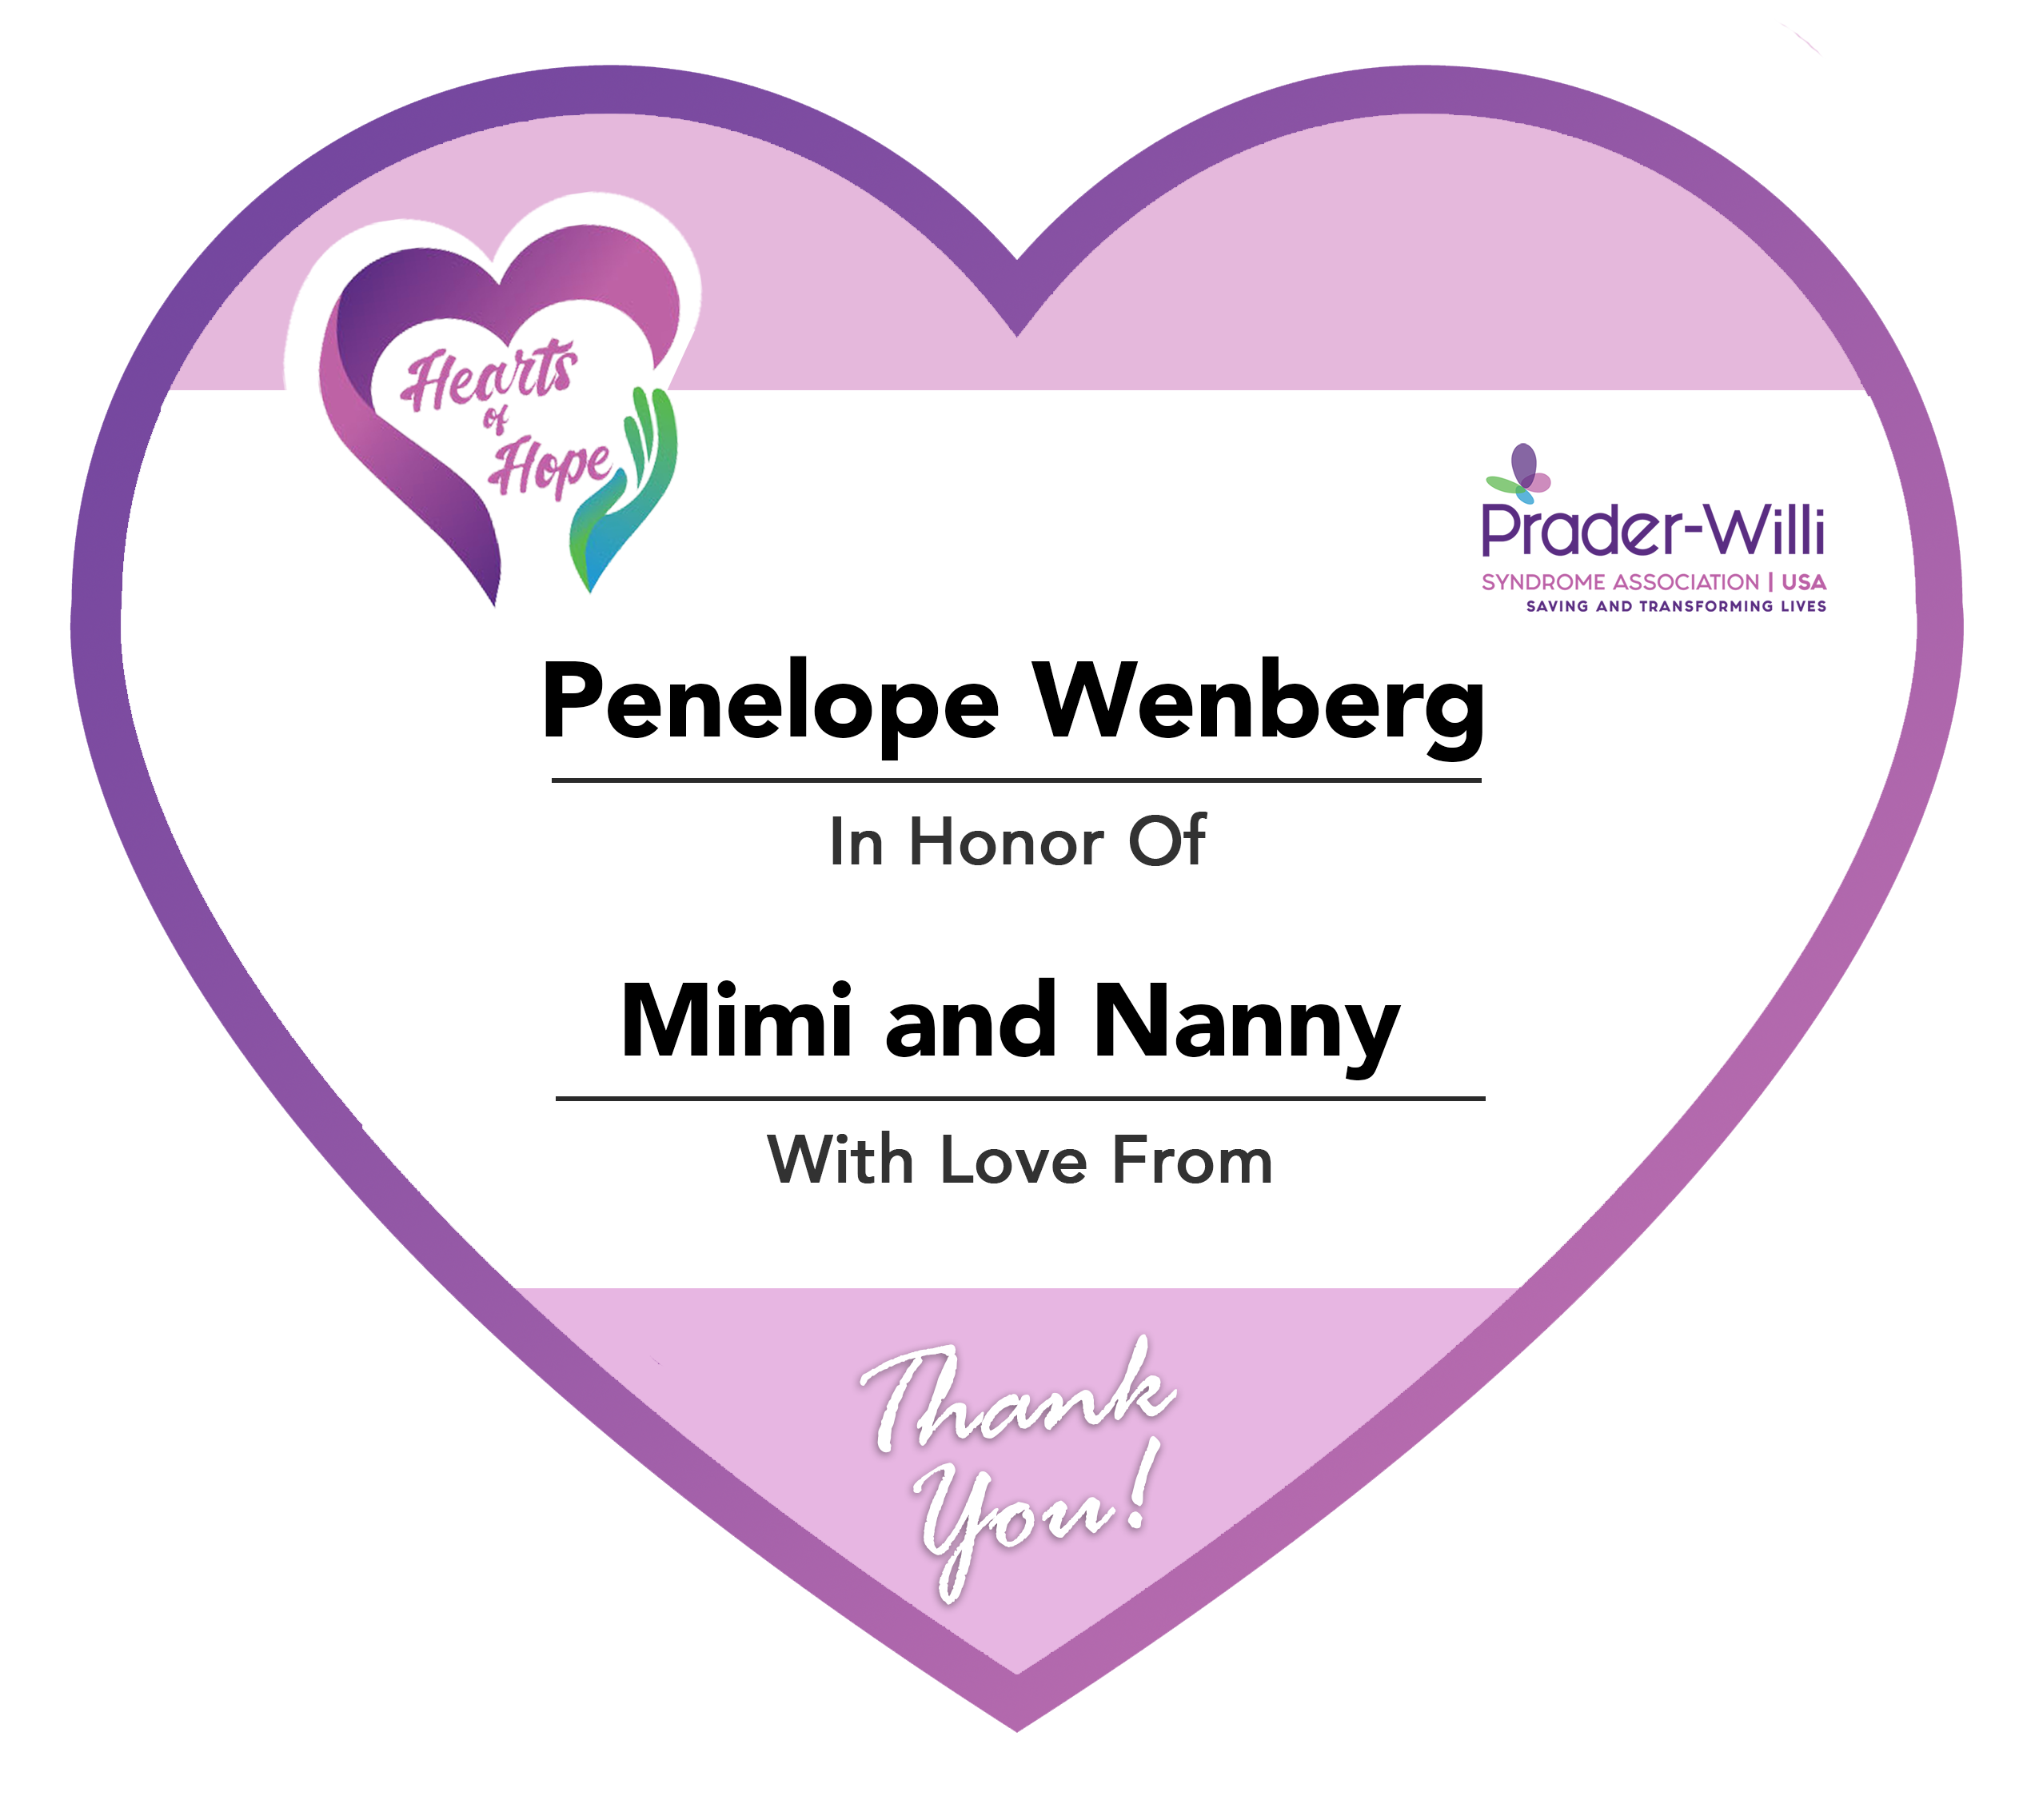 PWSA Paperheart PenelopeWenberg, Prader-Willi Syndrome Association | USA